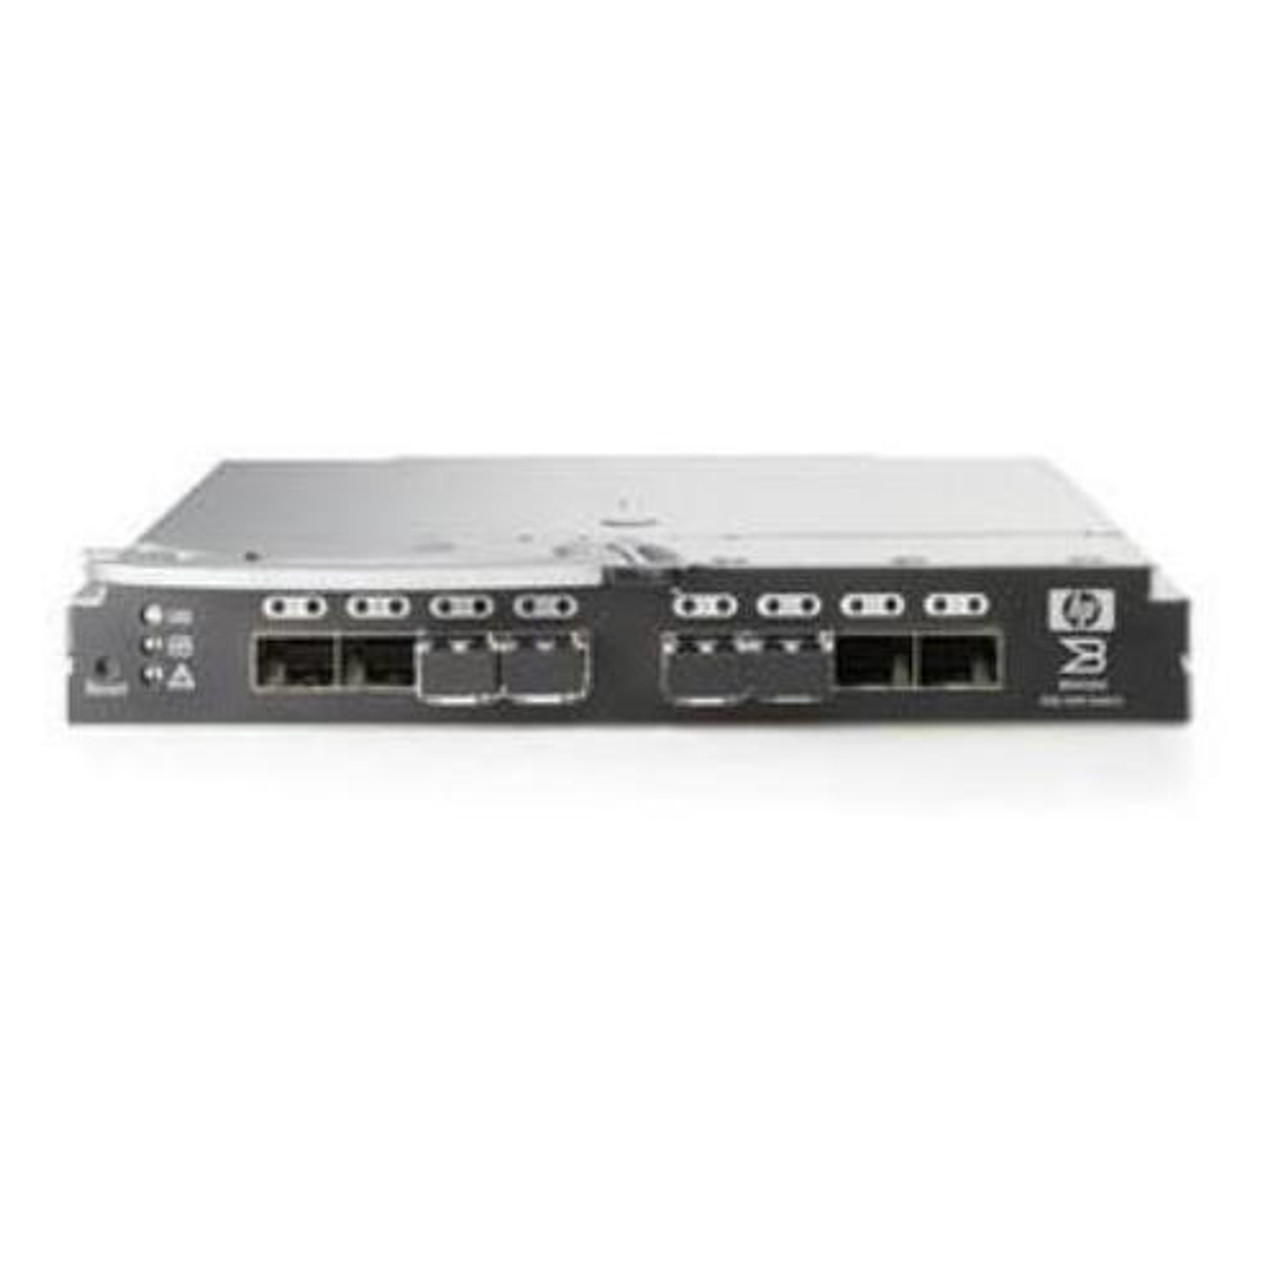 A7533A - Brocade 4Gb SAN Switch Base